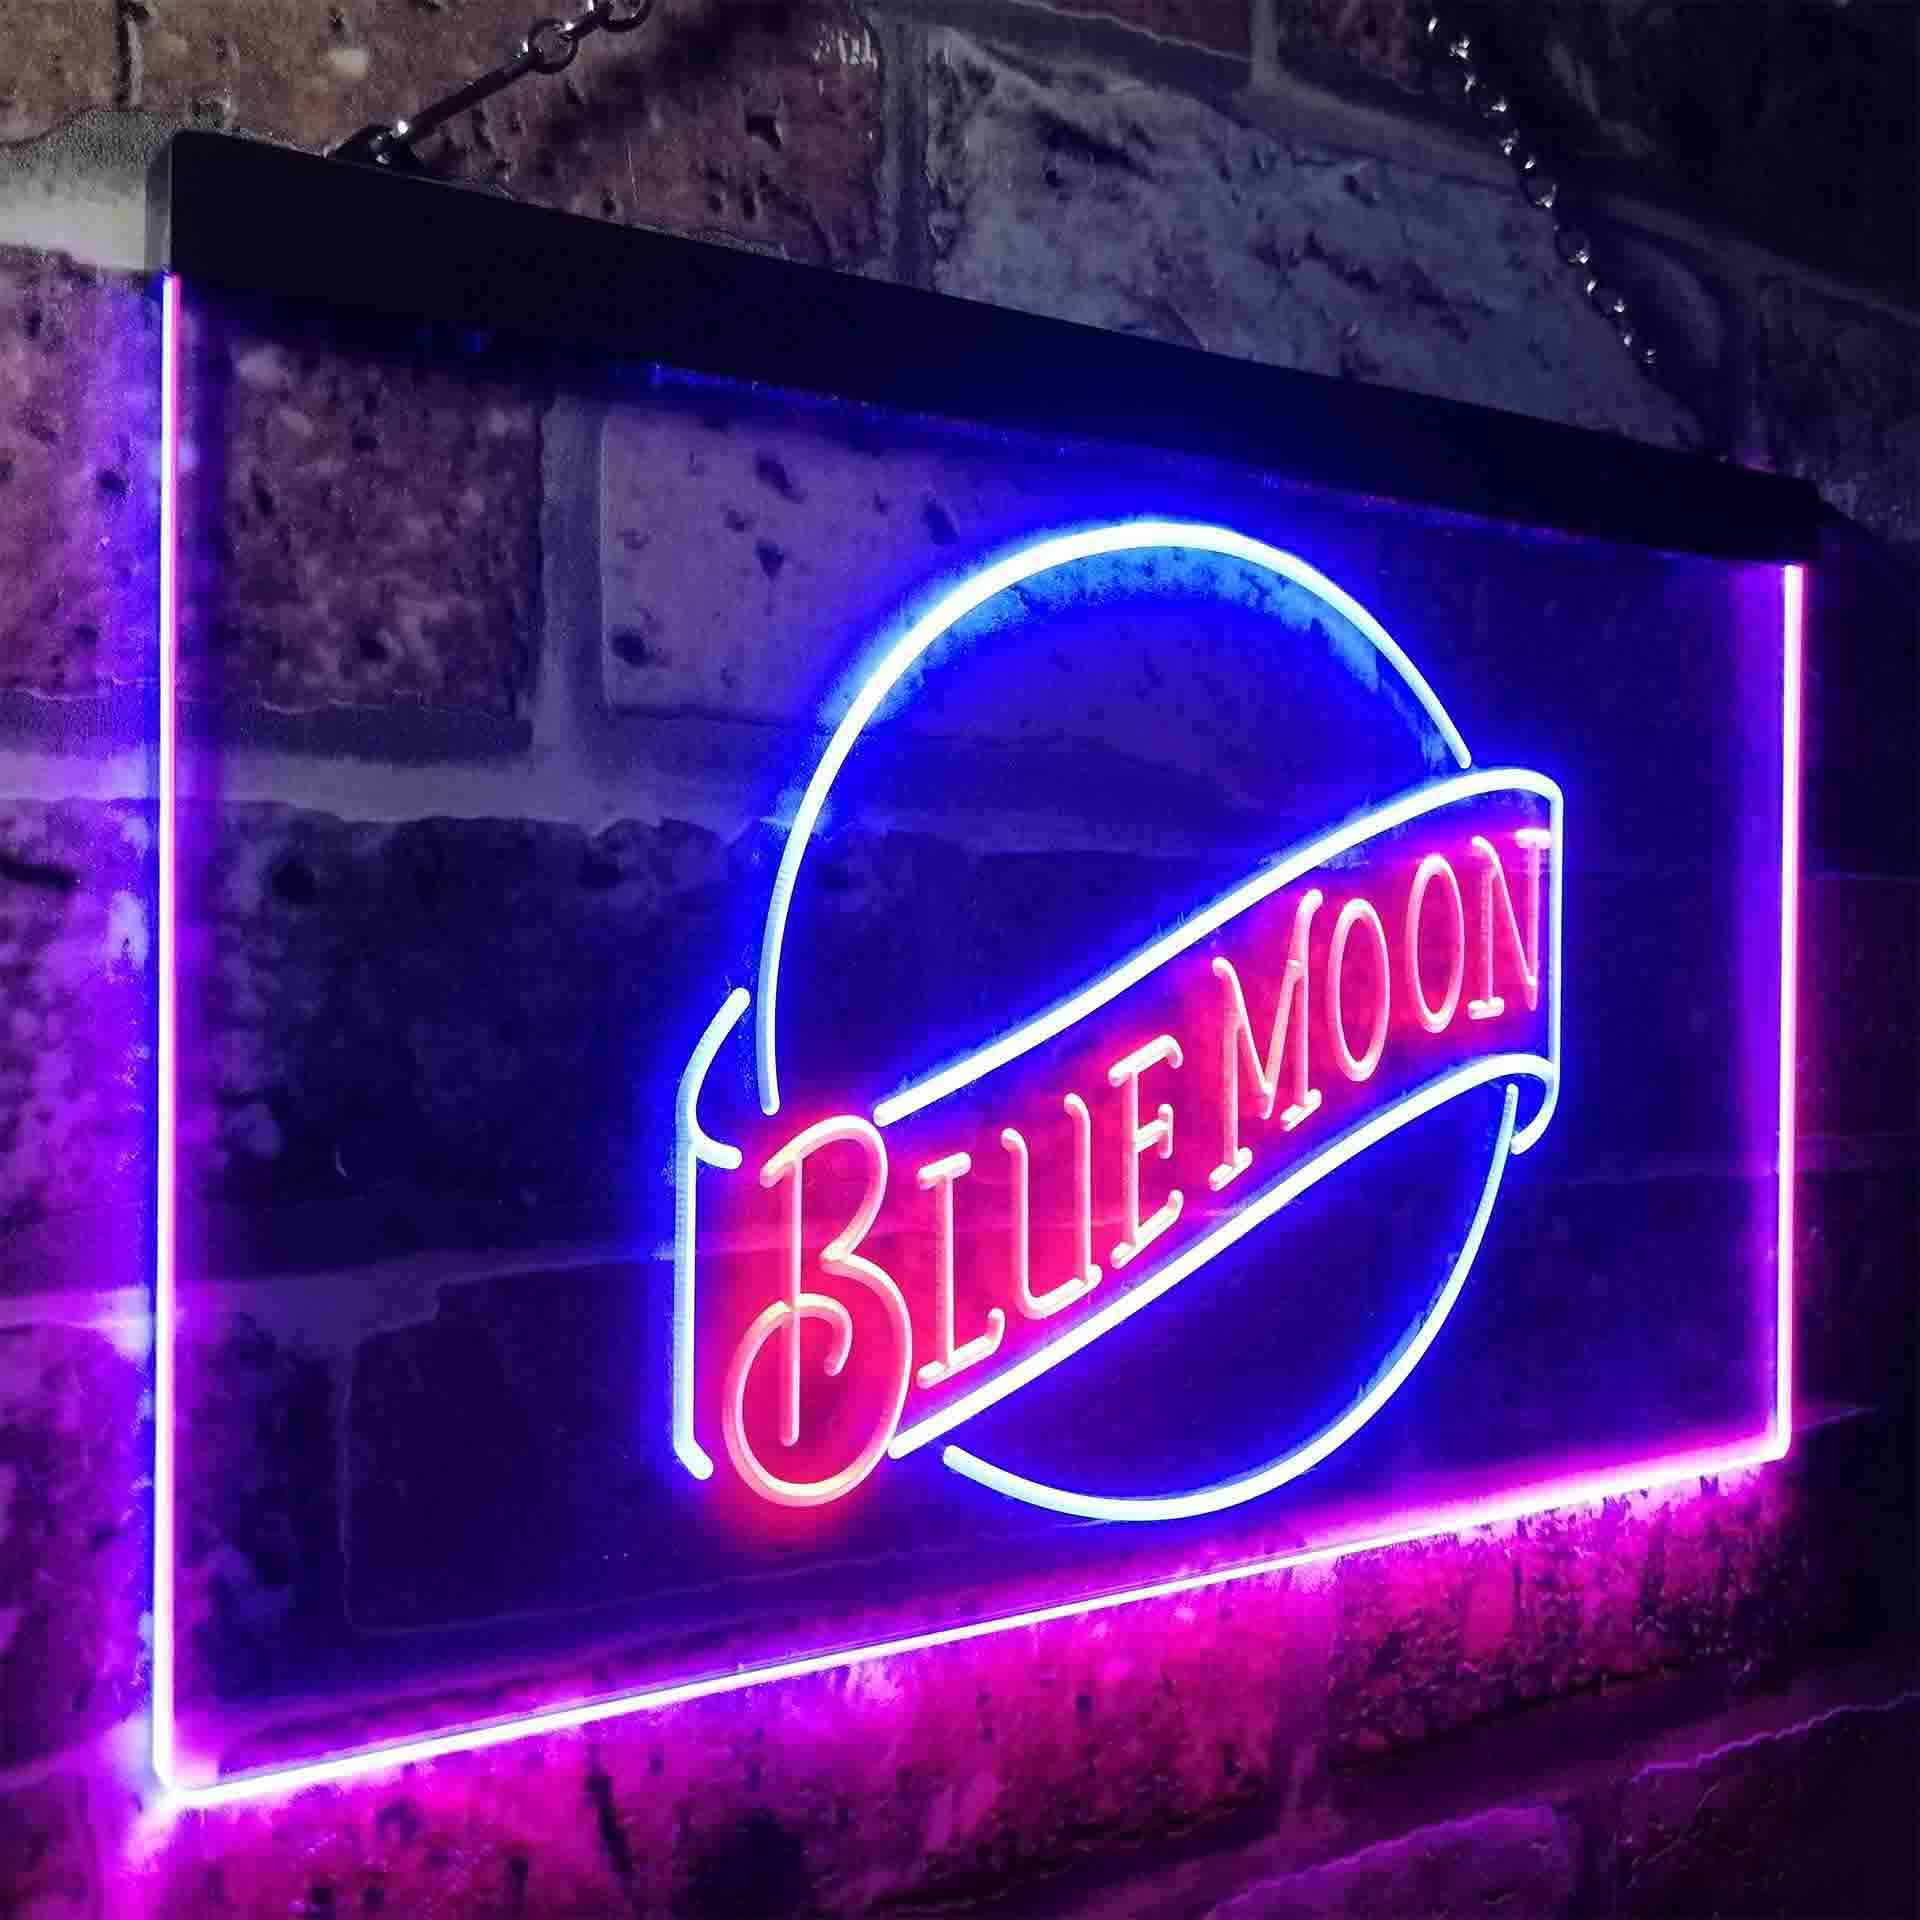 Blue Moon Beer Bar Neon LED Sign